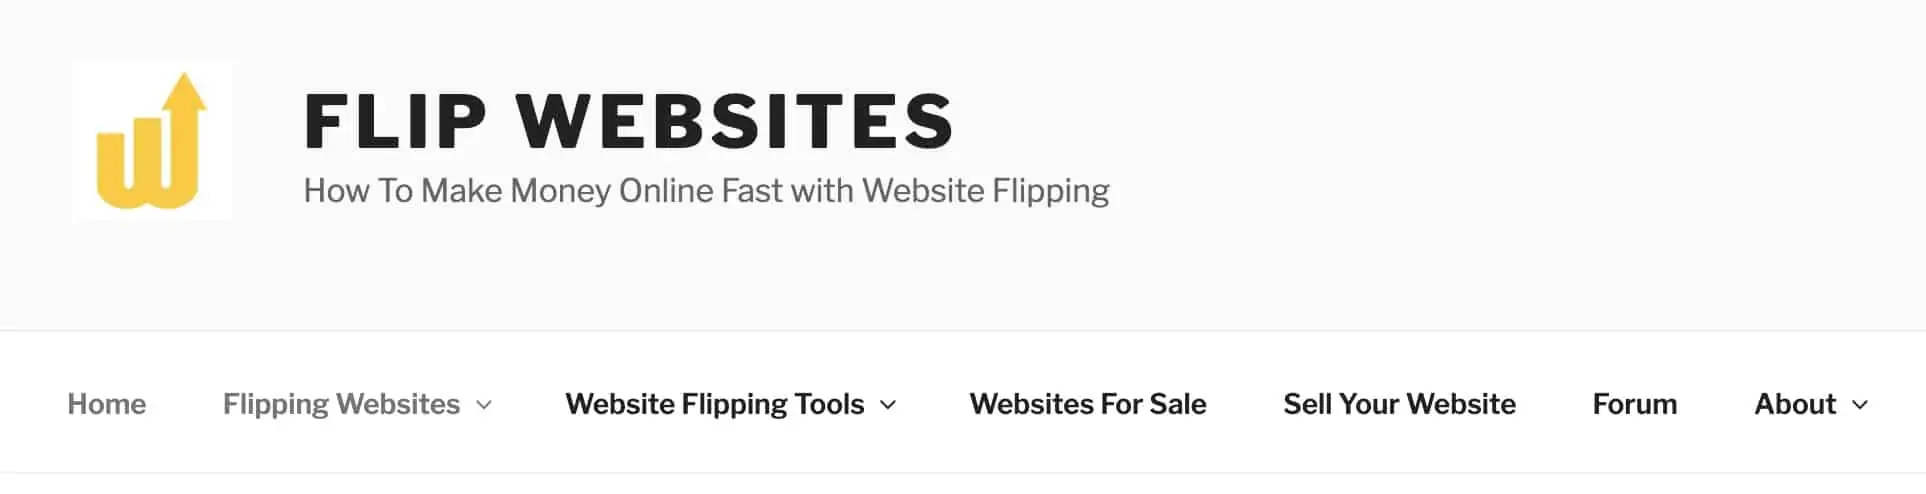 flipwebsites.com old website